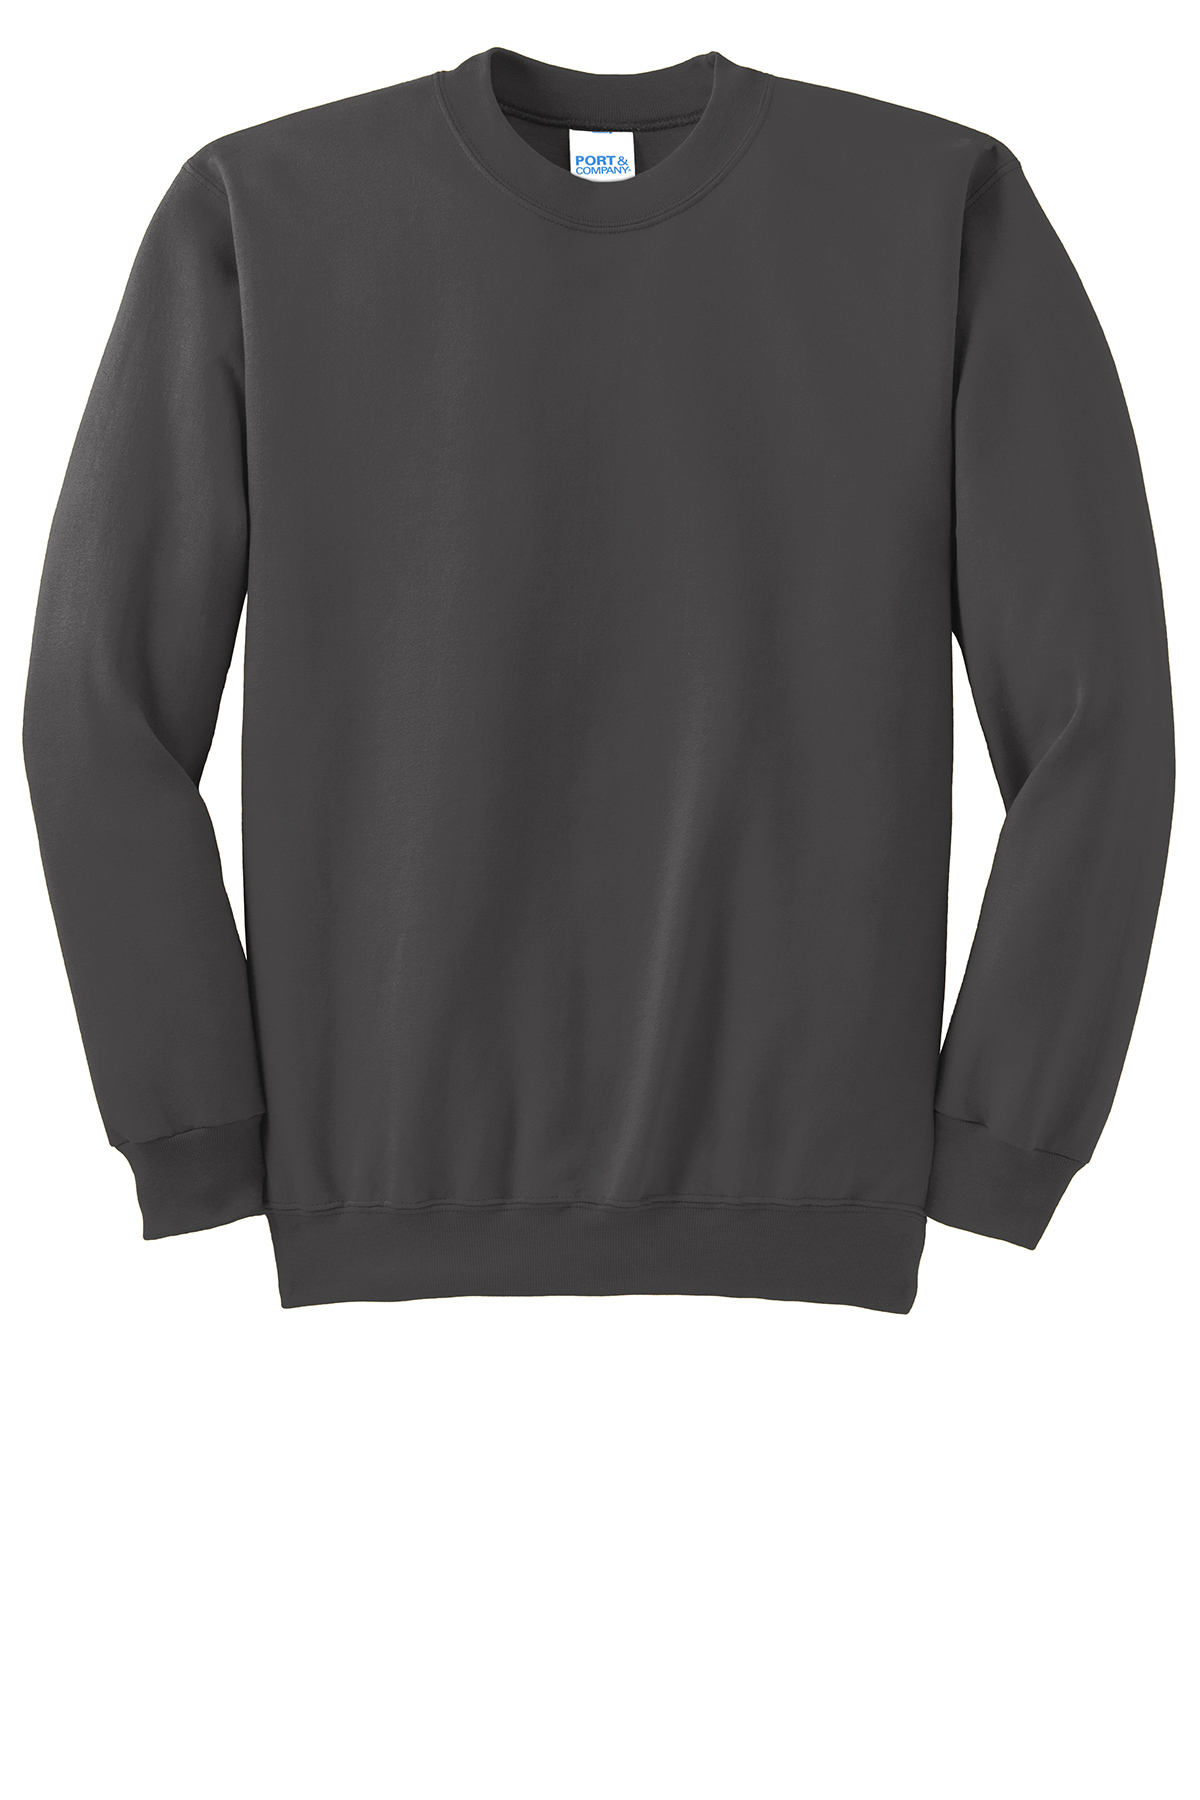 Port & Company Tall Essential Fleece Crewneck Sweatshirt | Product 